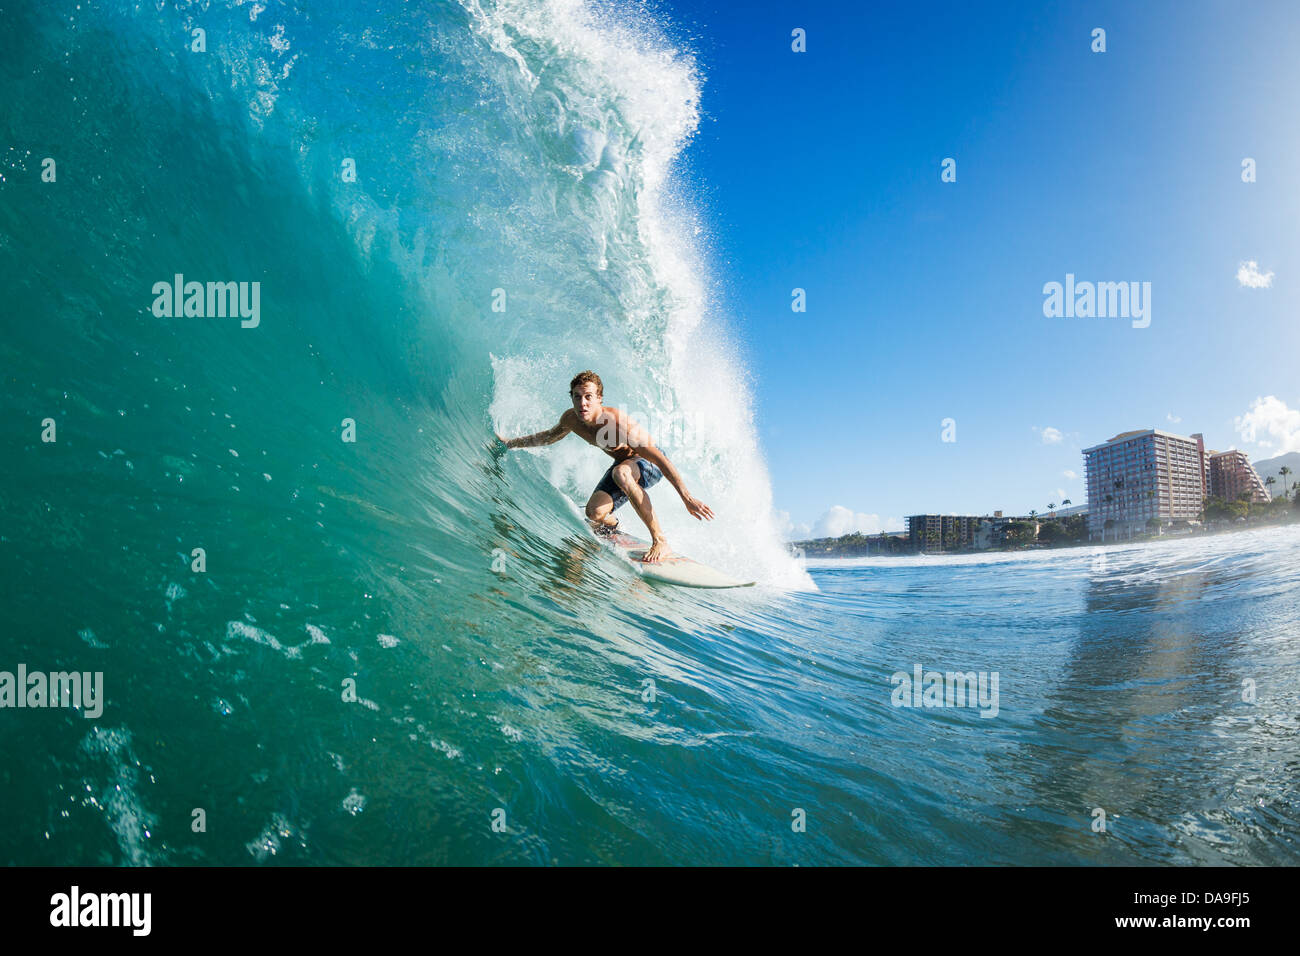 Surfer on Blue Ocean Wave Getting Barreled Stock Photo